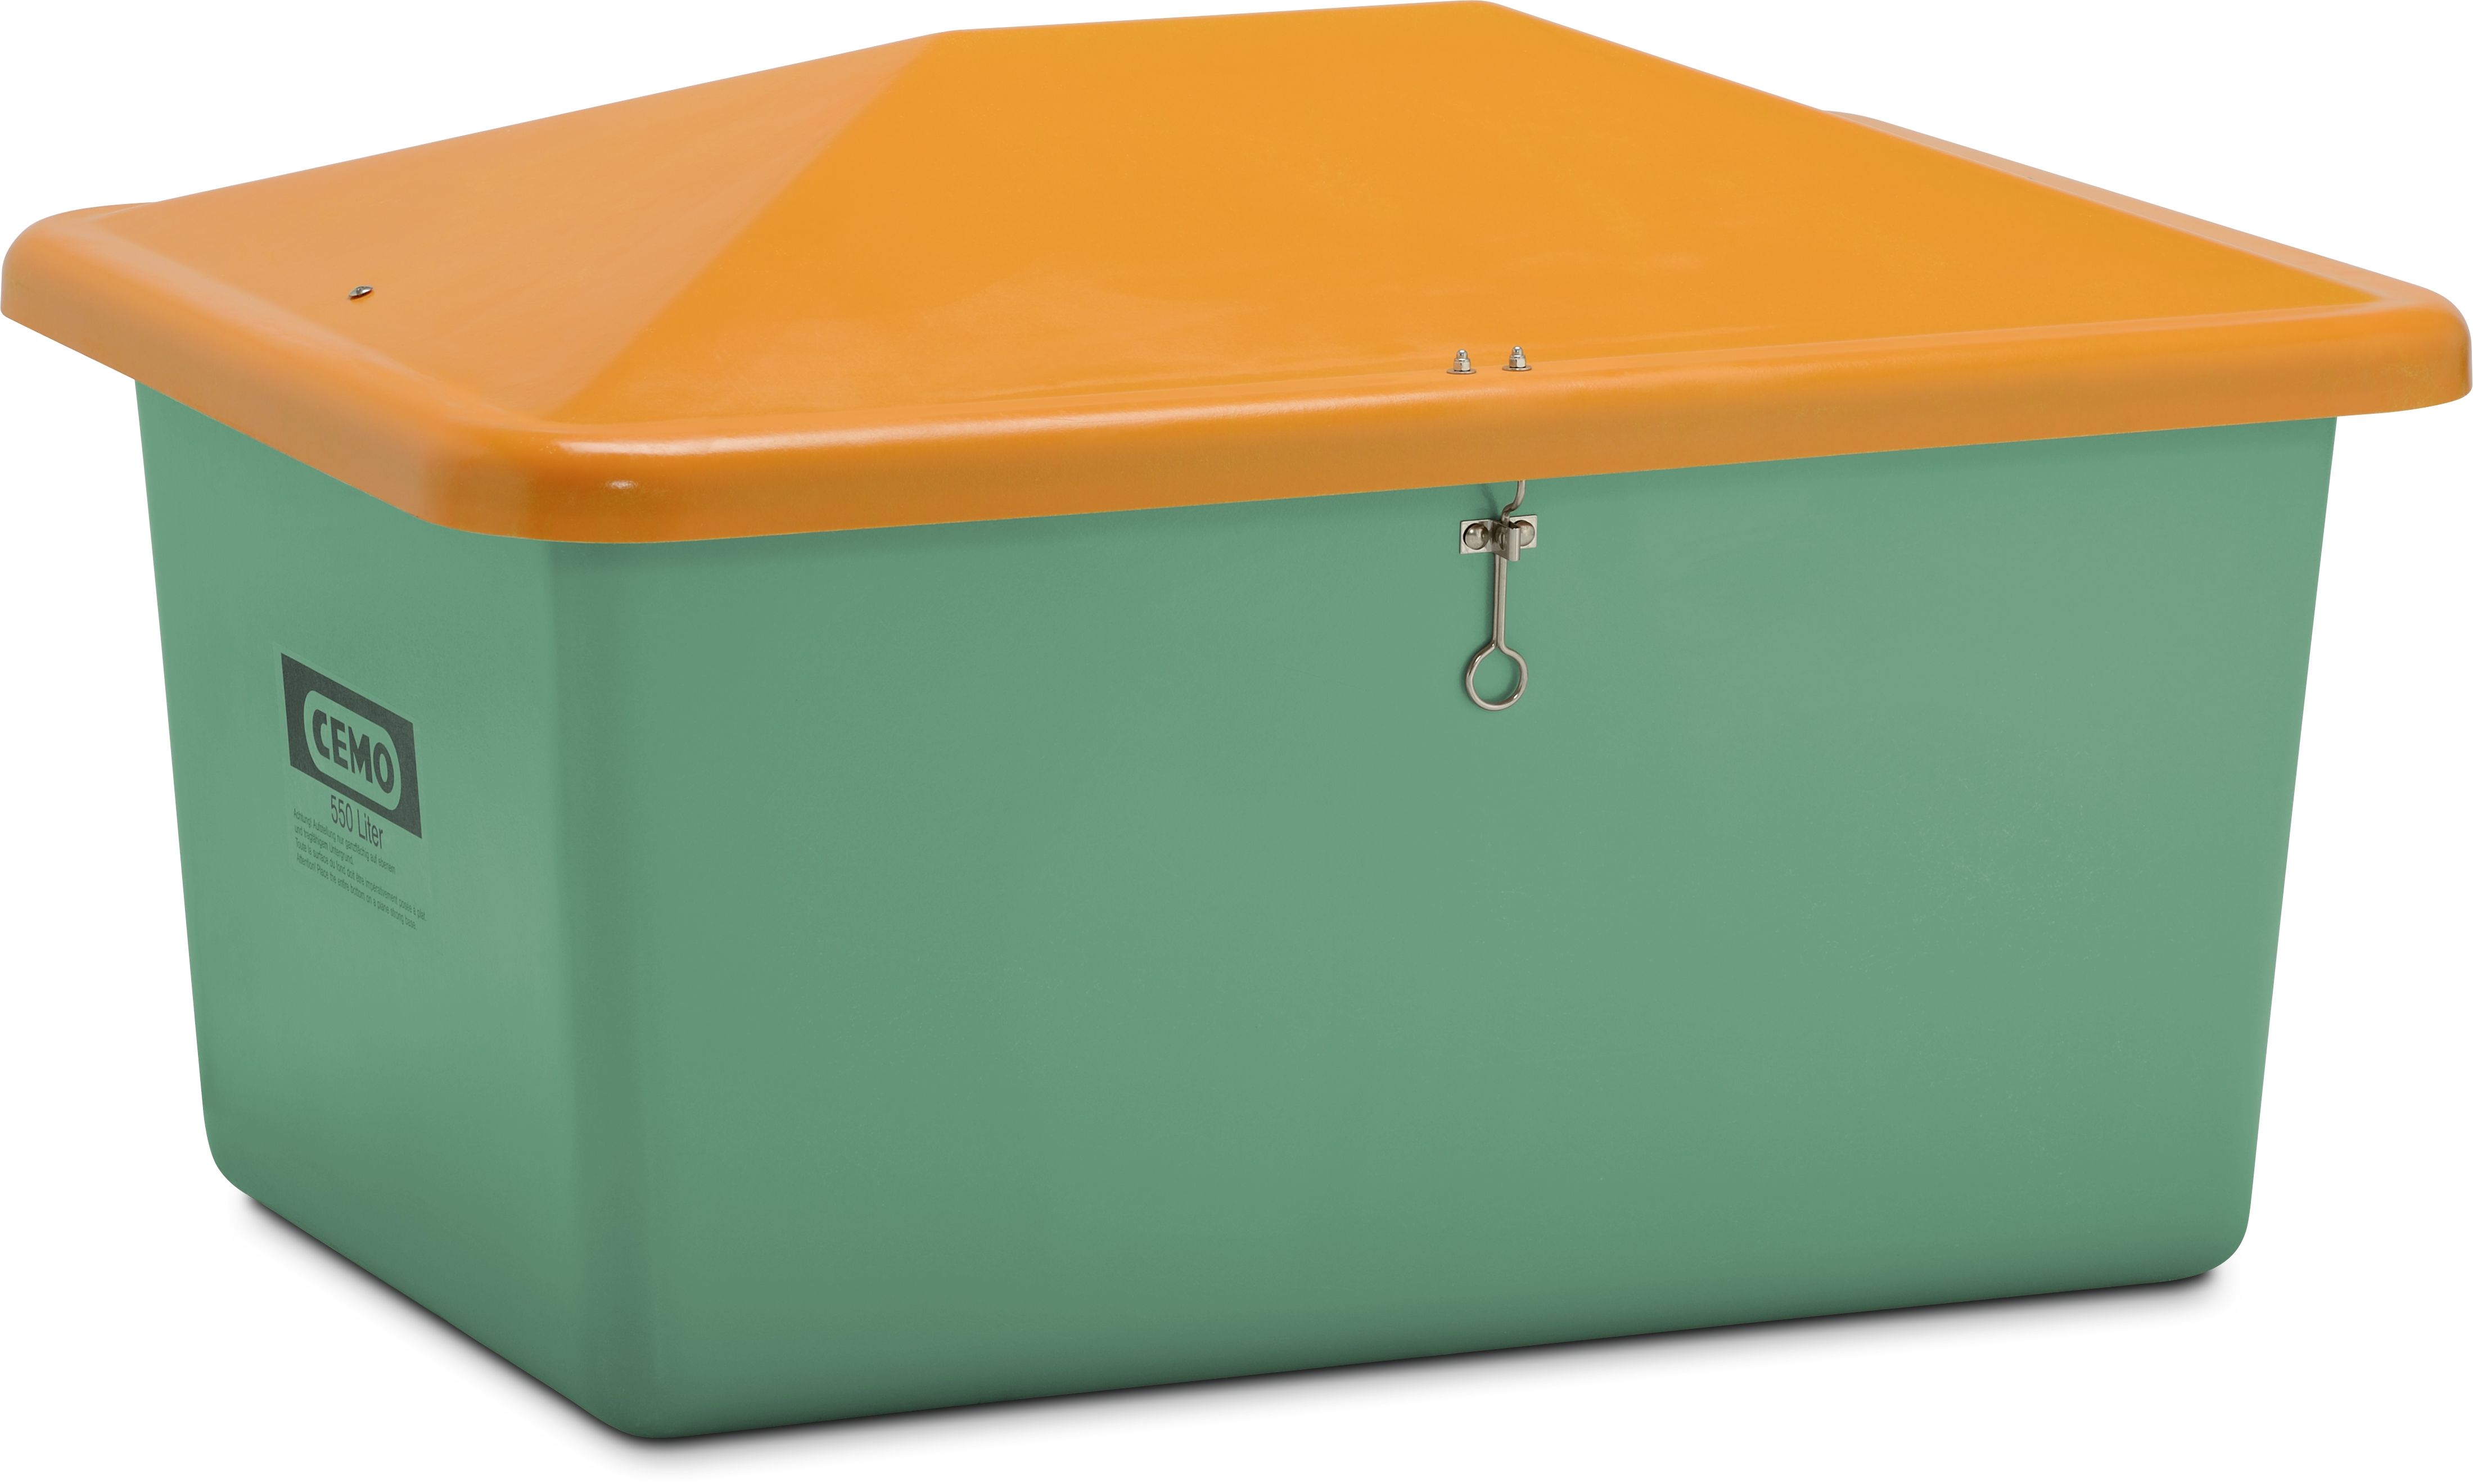 CEMO Streugutbehälter "V" 550 l, grün/orange, mit Vandalismusdeckel - 10900